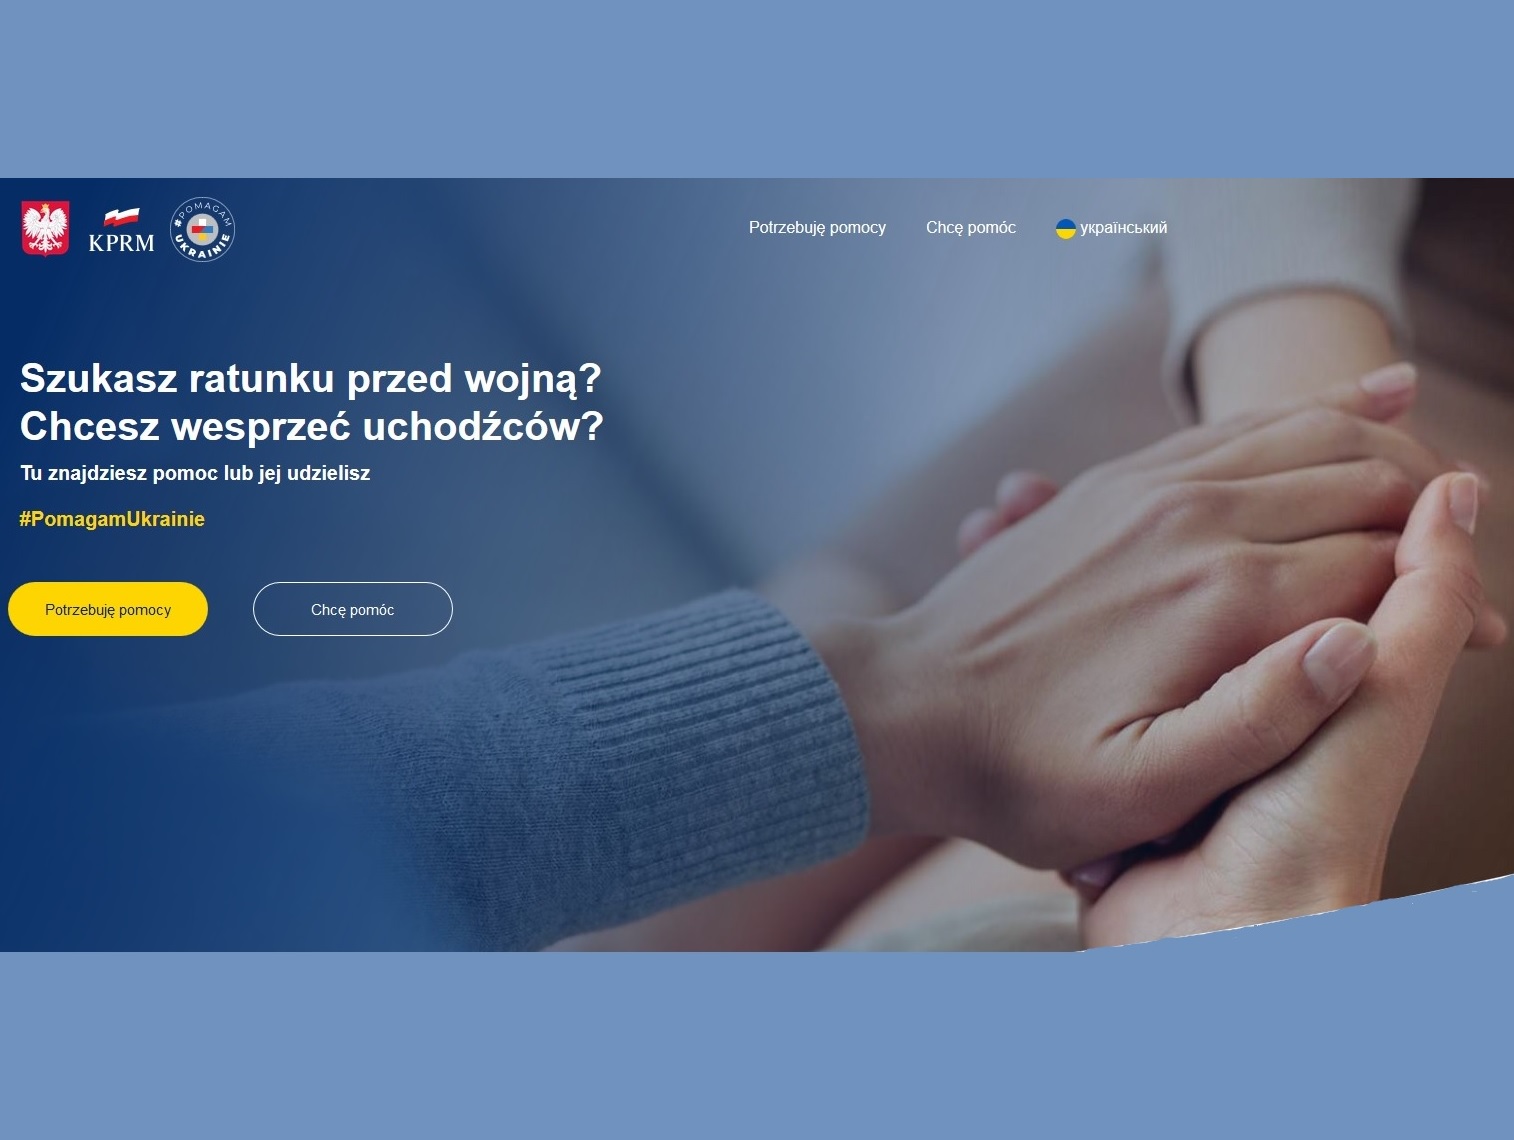 pomagamukrainie.gov.pl – official government website and application